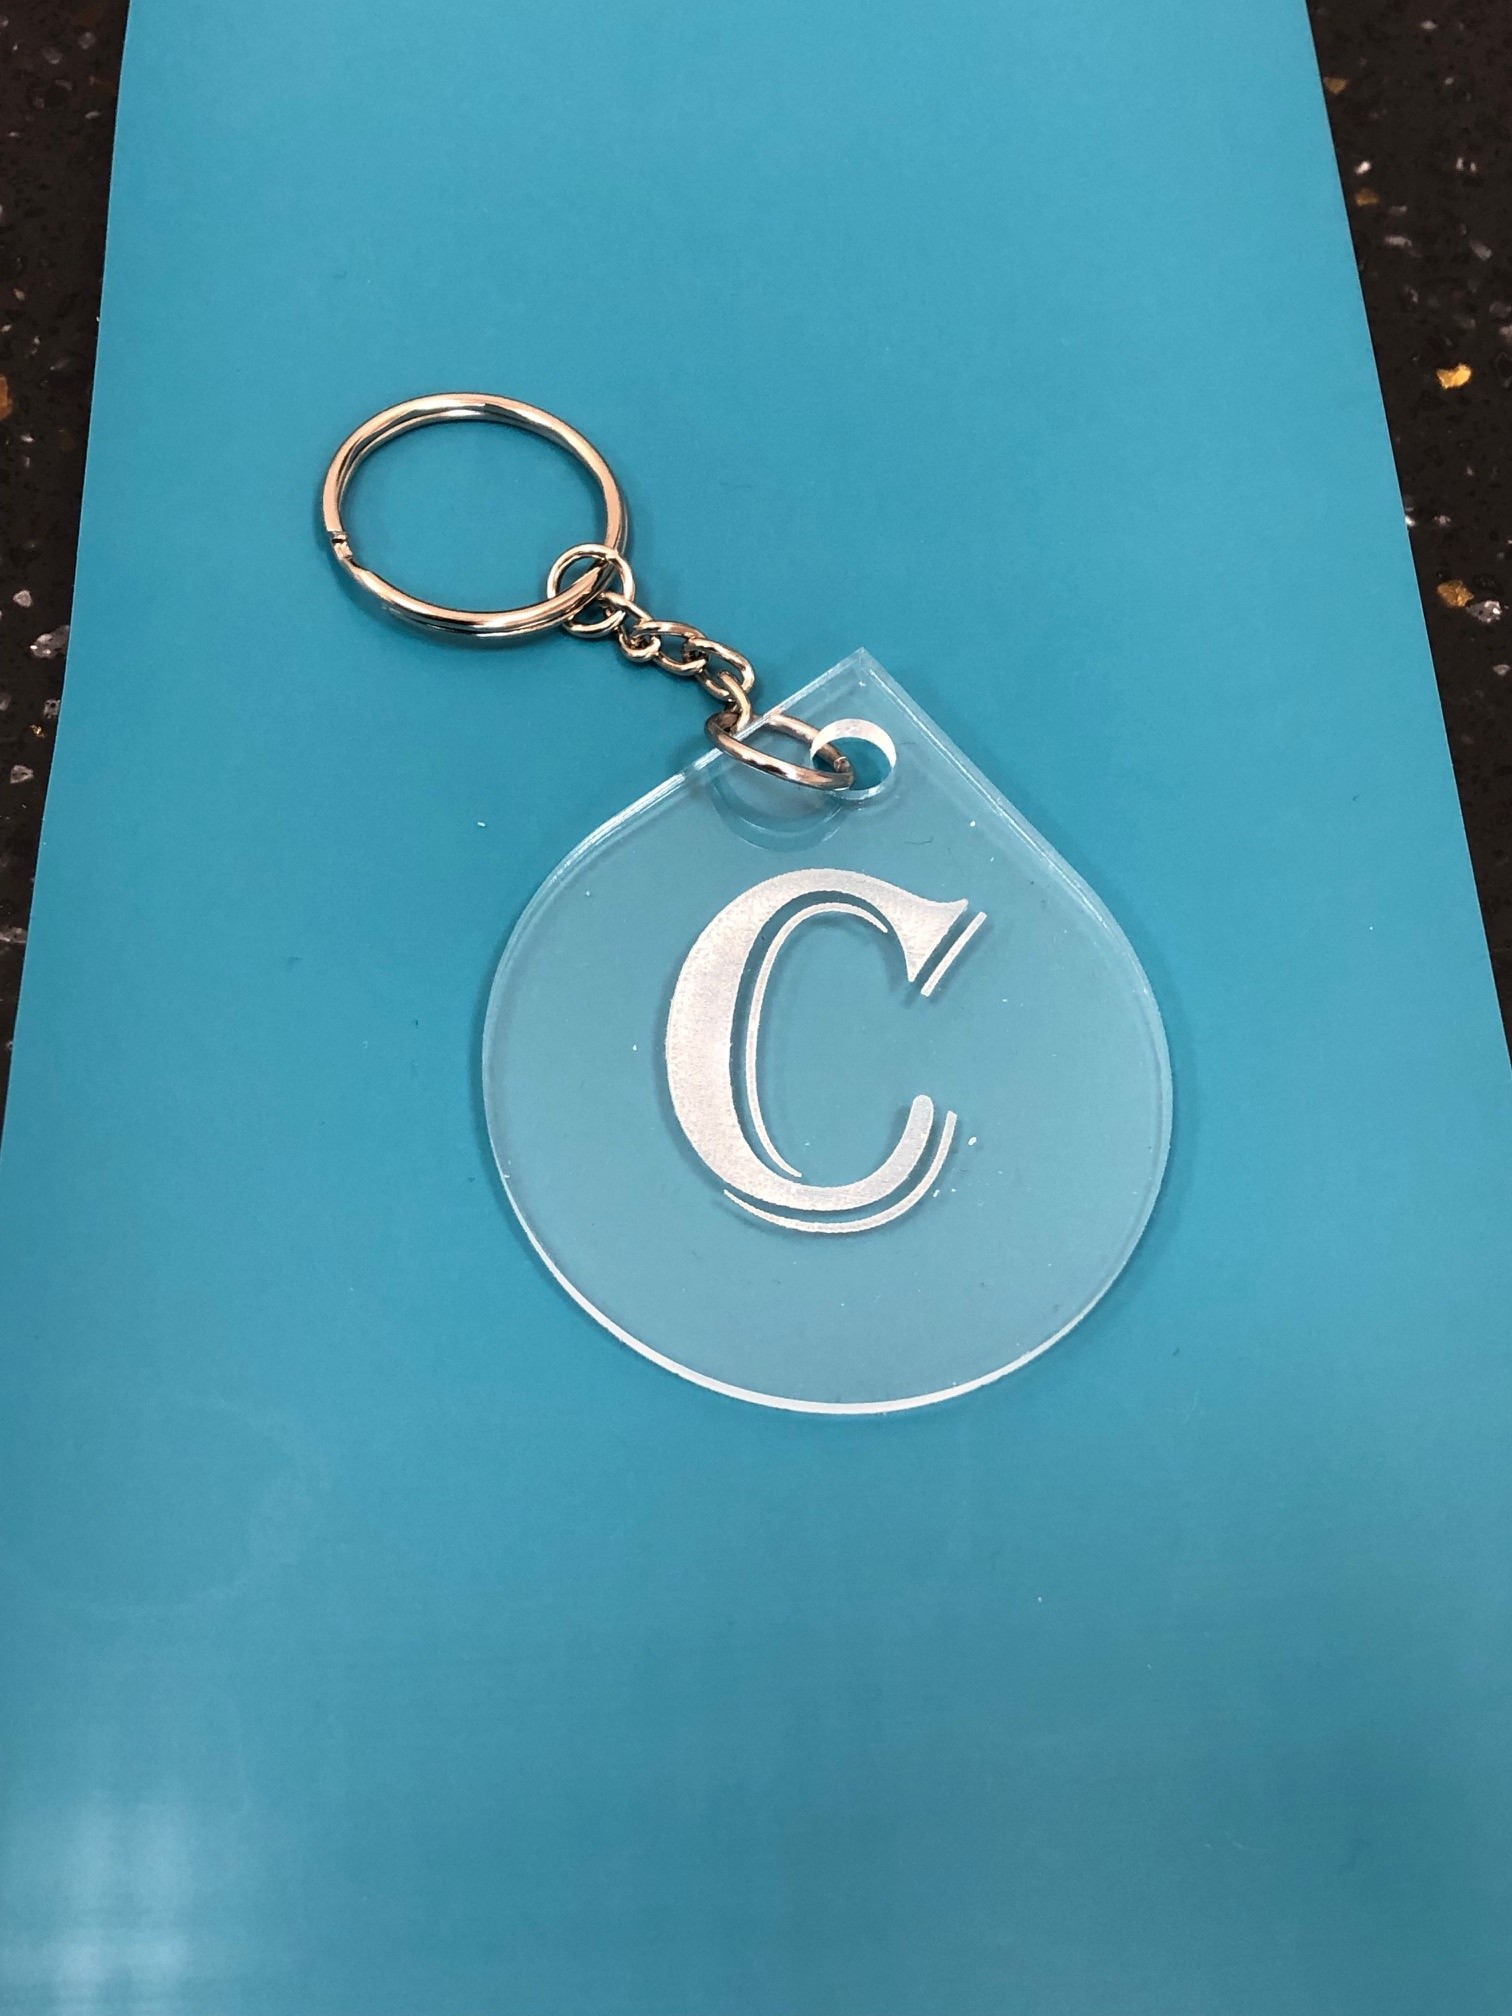 acrylic keychain with initial C